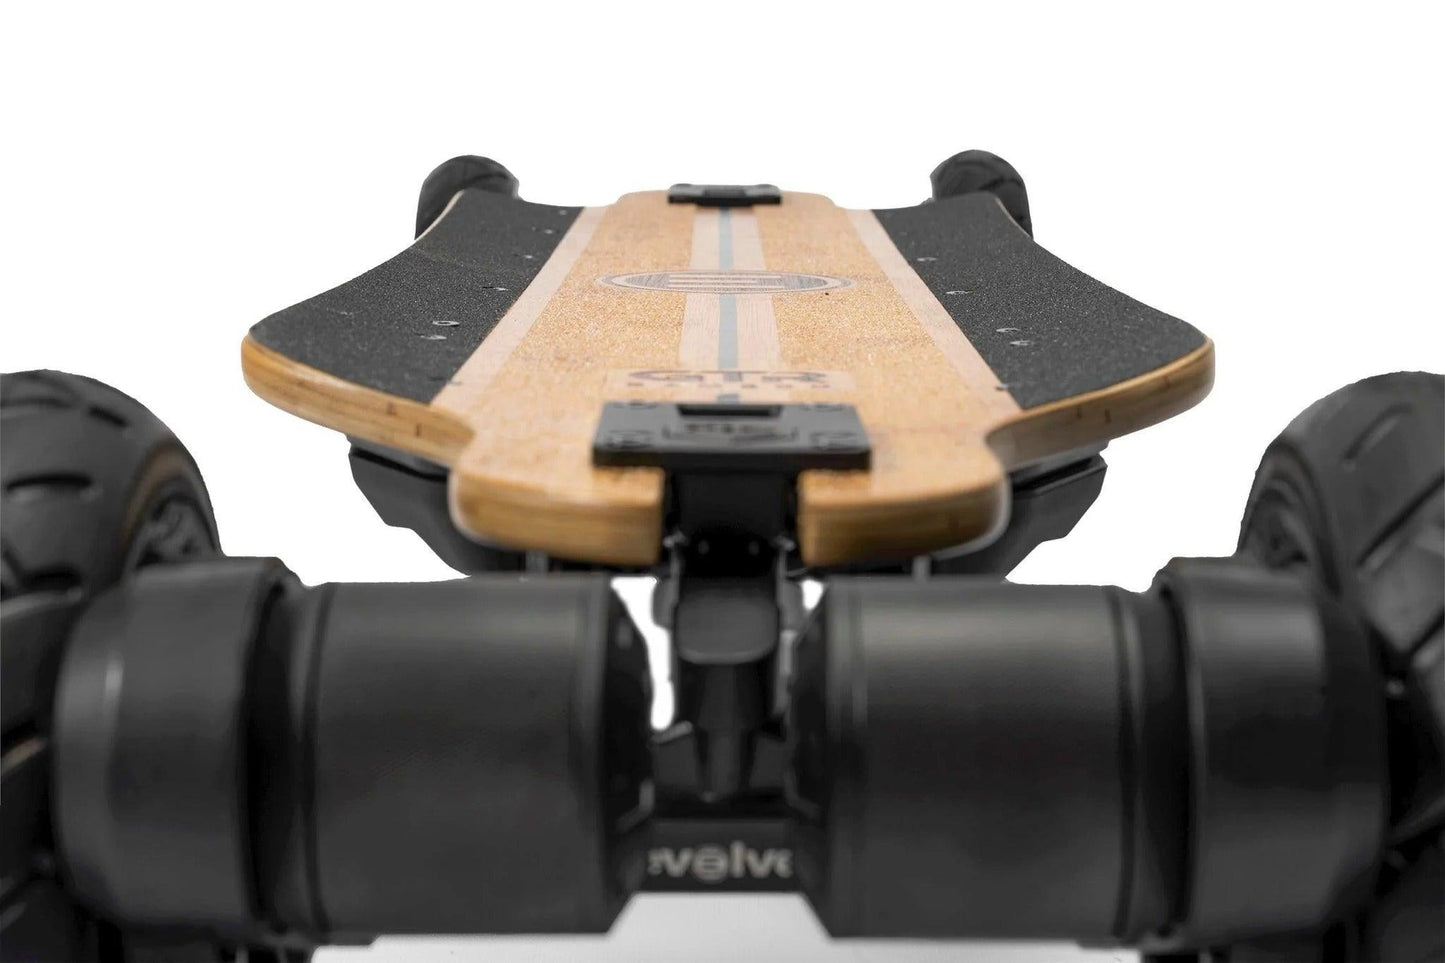 Evolve GTR Bamboo All Terrain Series 2 **On Sale** - skateboards - skateboards - Electric Monkey NZ